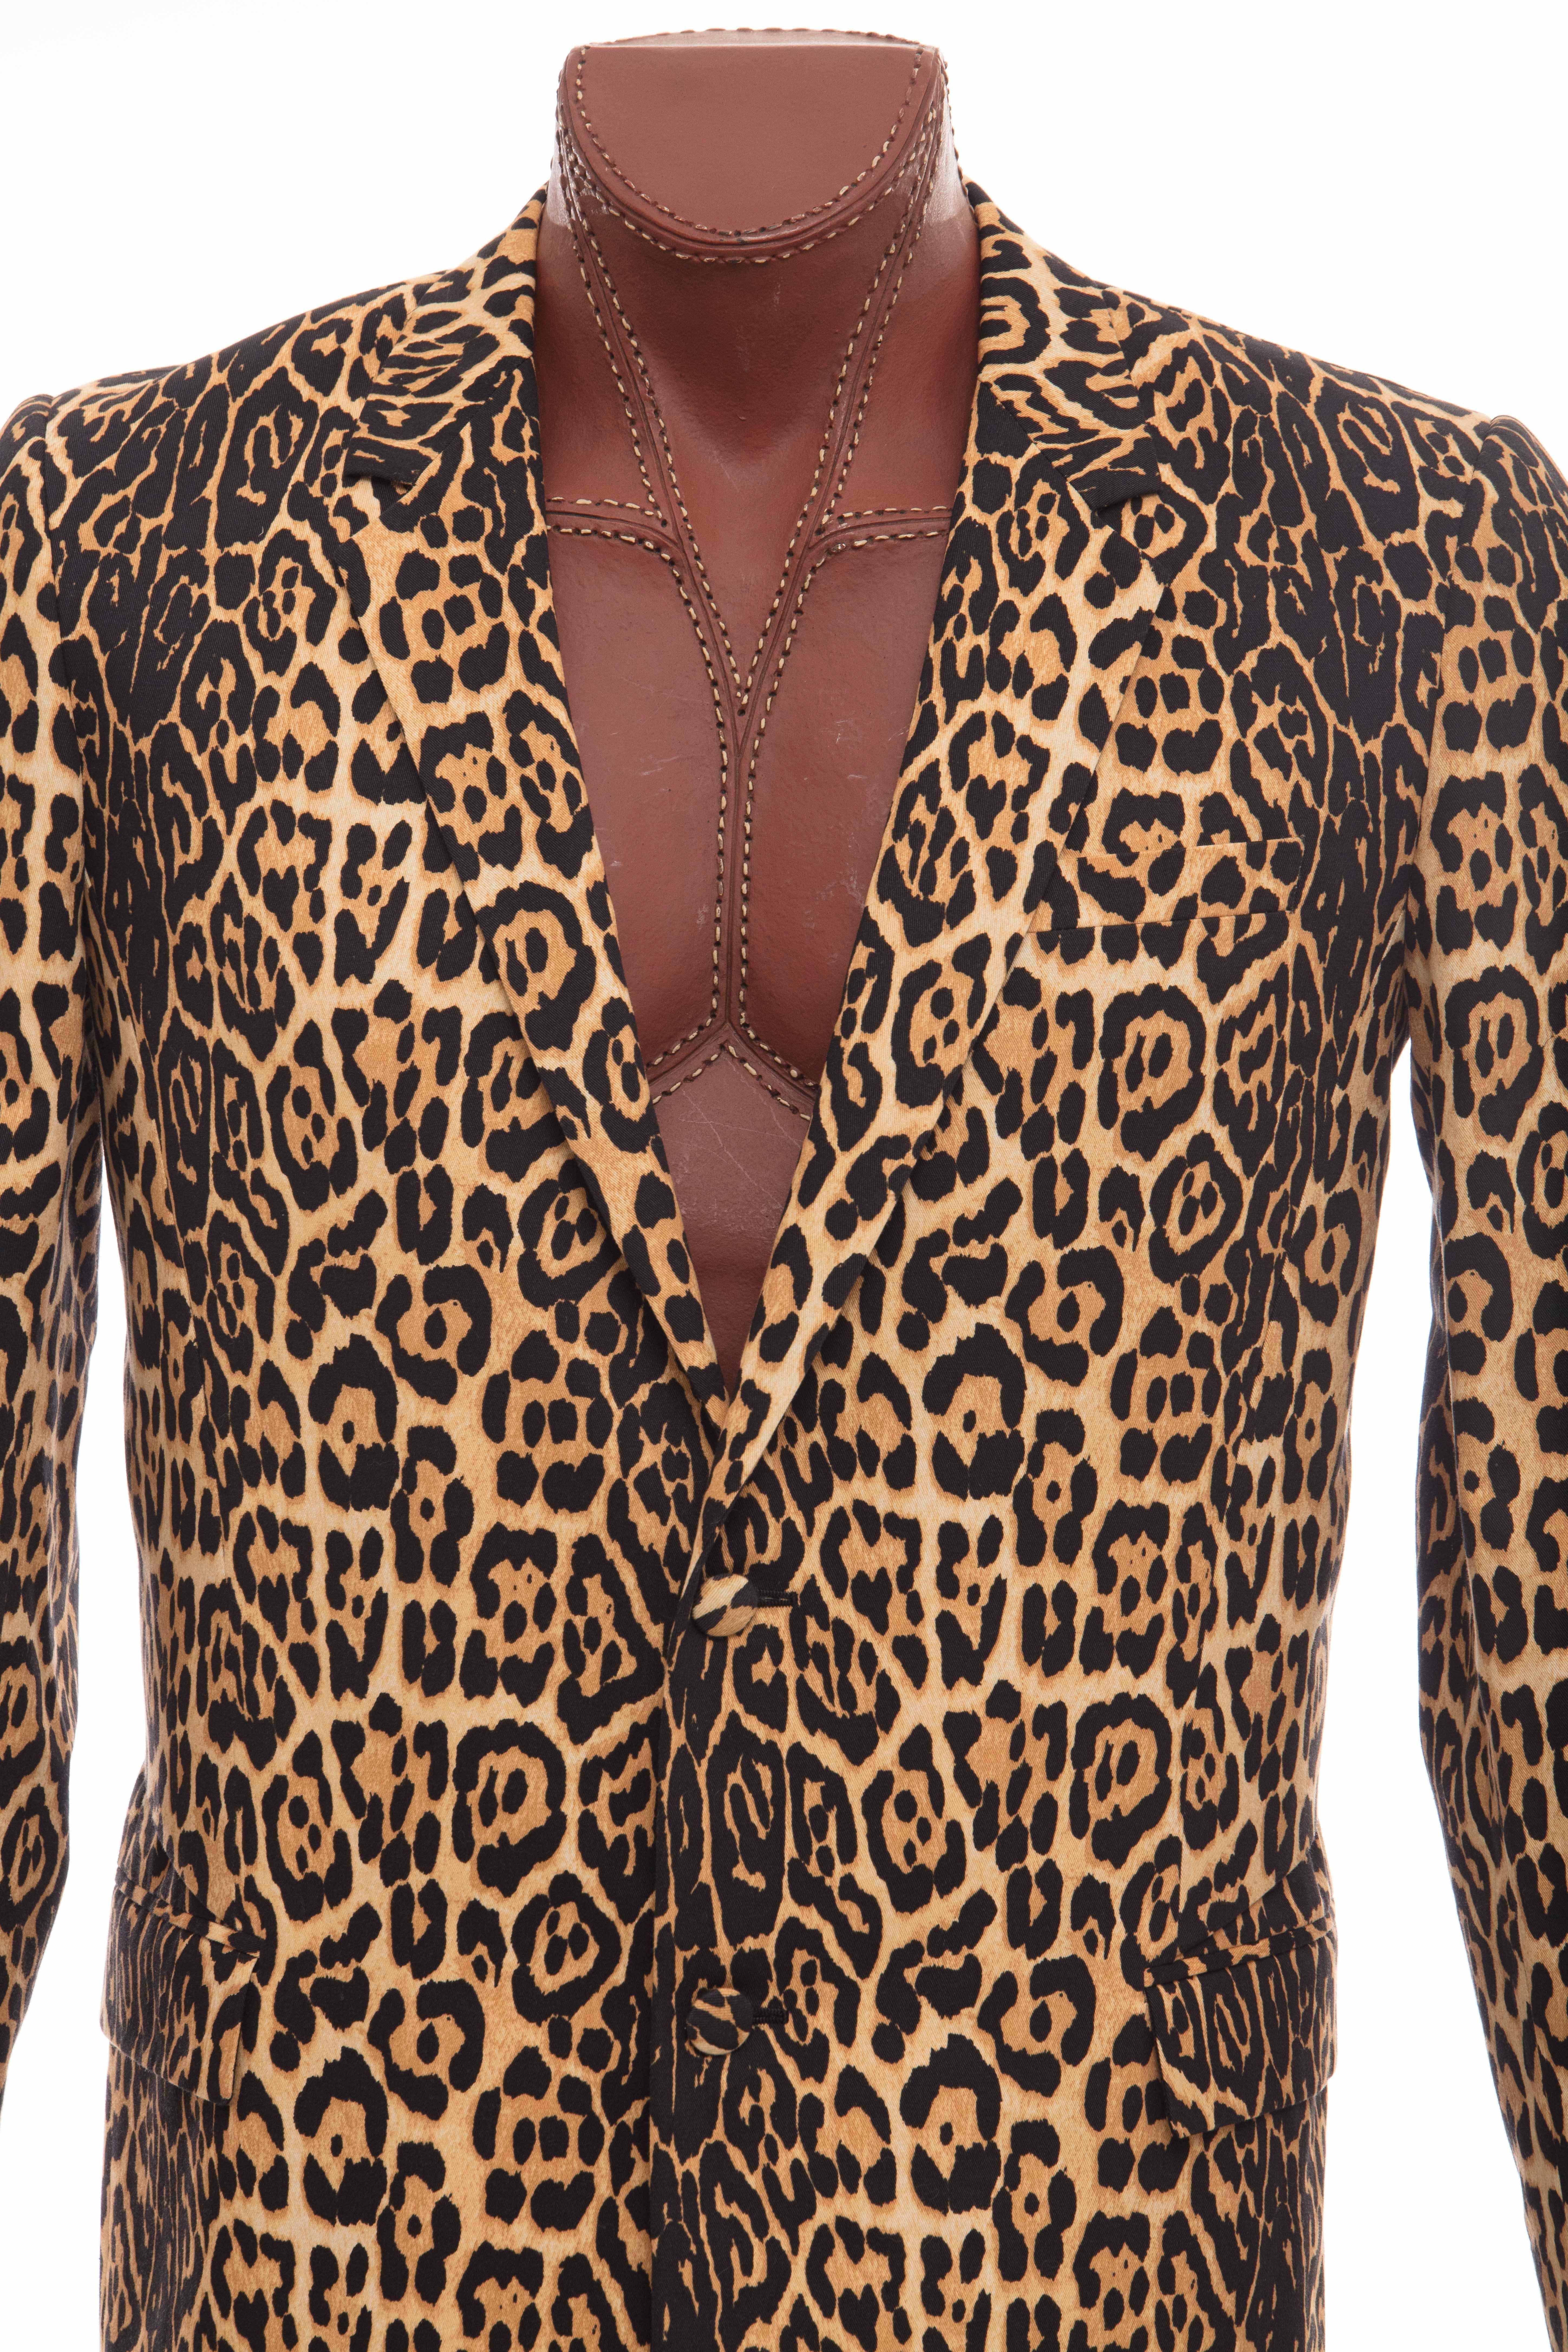 cheetah blazer